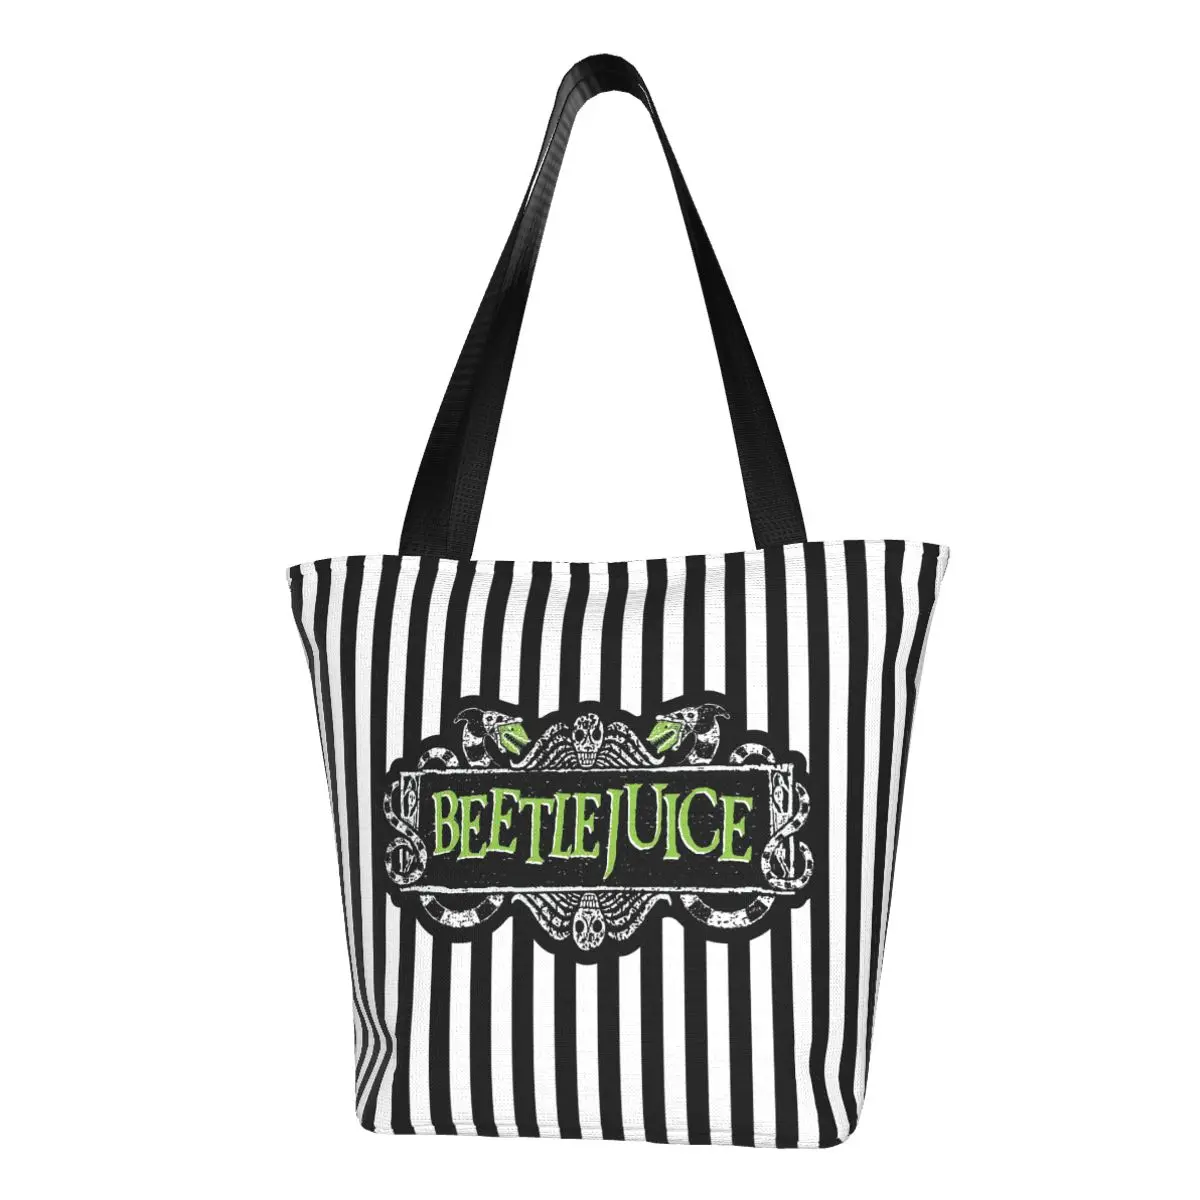 

Tim Burton Beetlejuice Groceries Shopping Tote Bag Women Cute Horror Movie Canvas Shopper Shoulder Bags Big Capacity Handbags